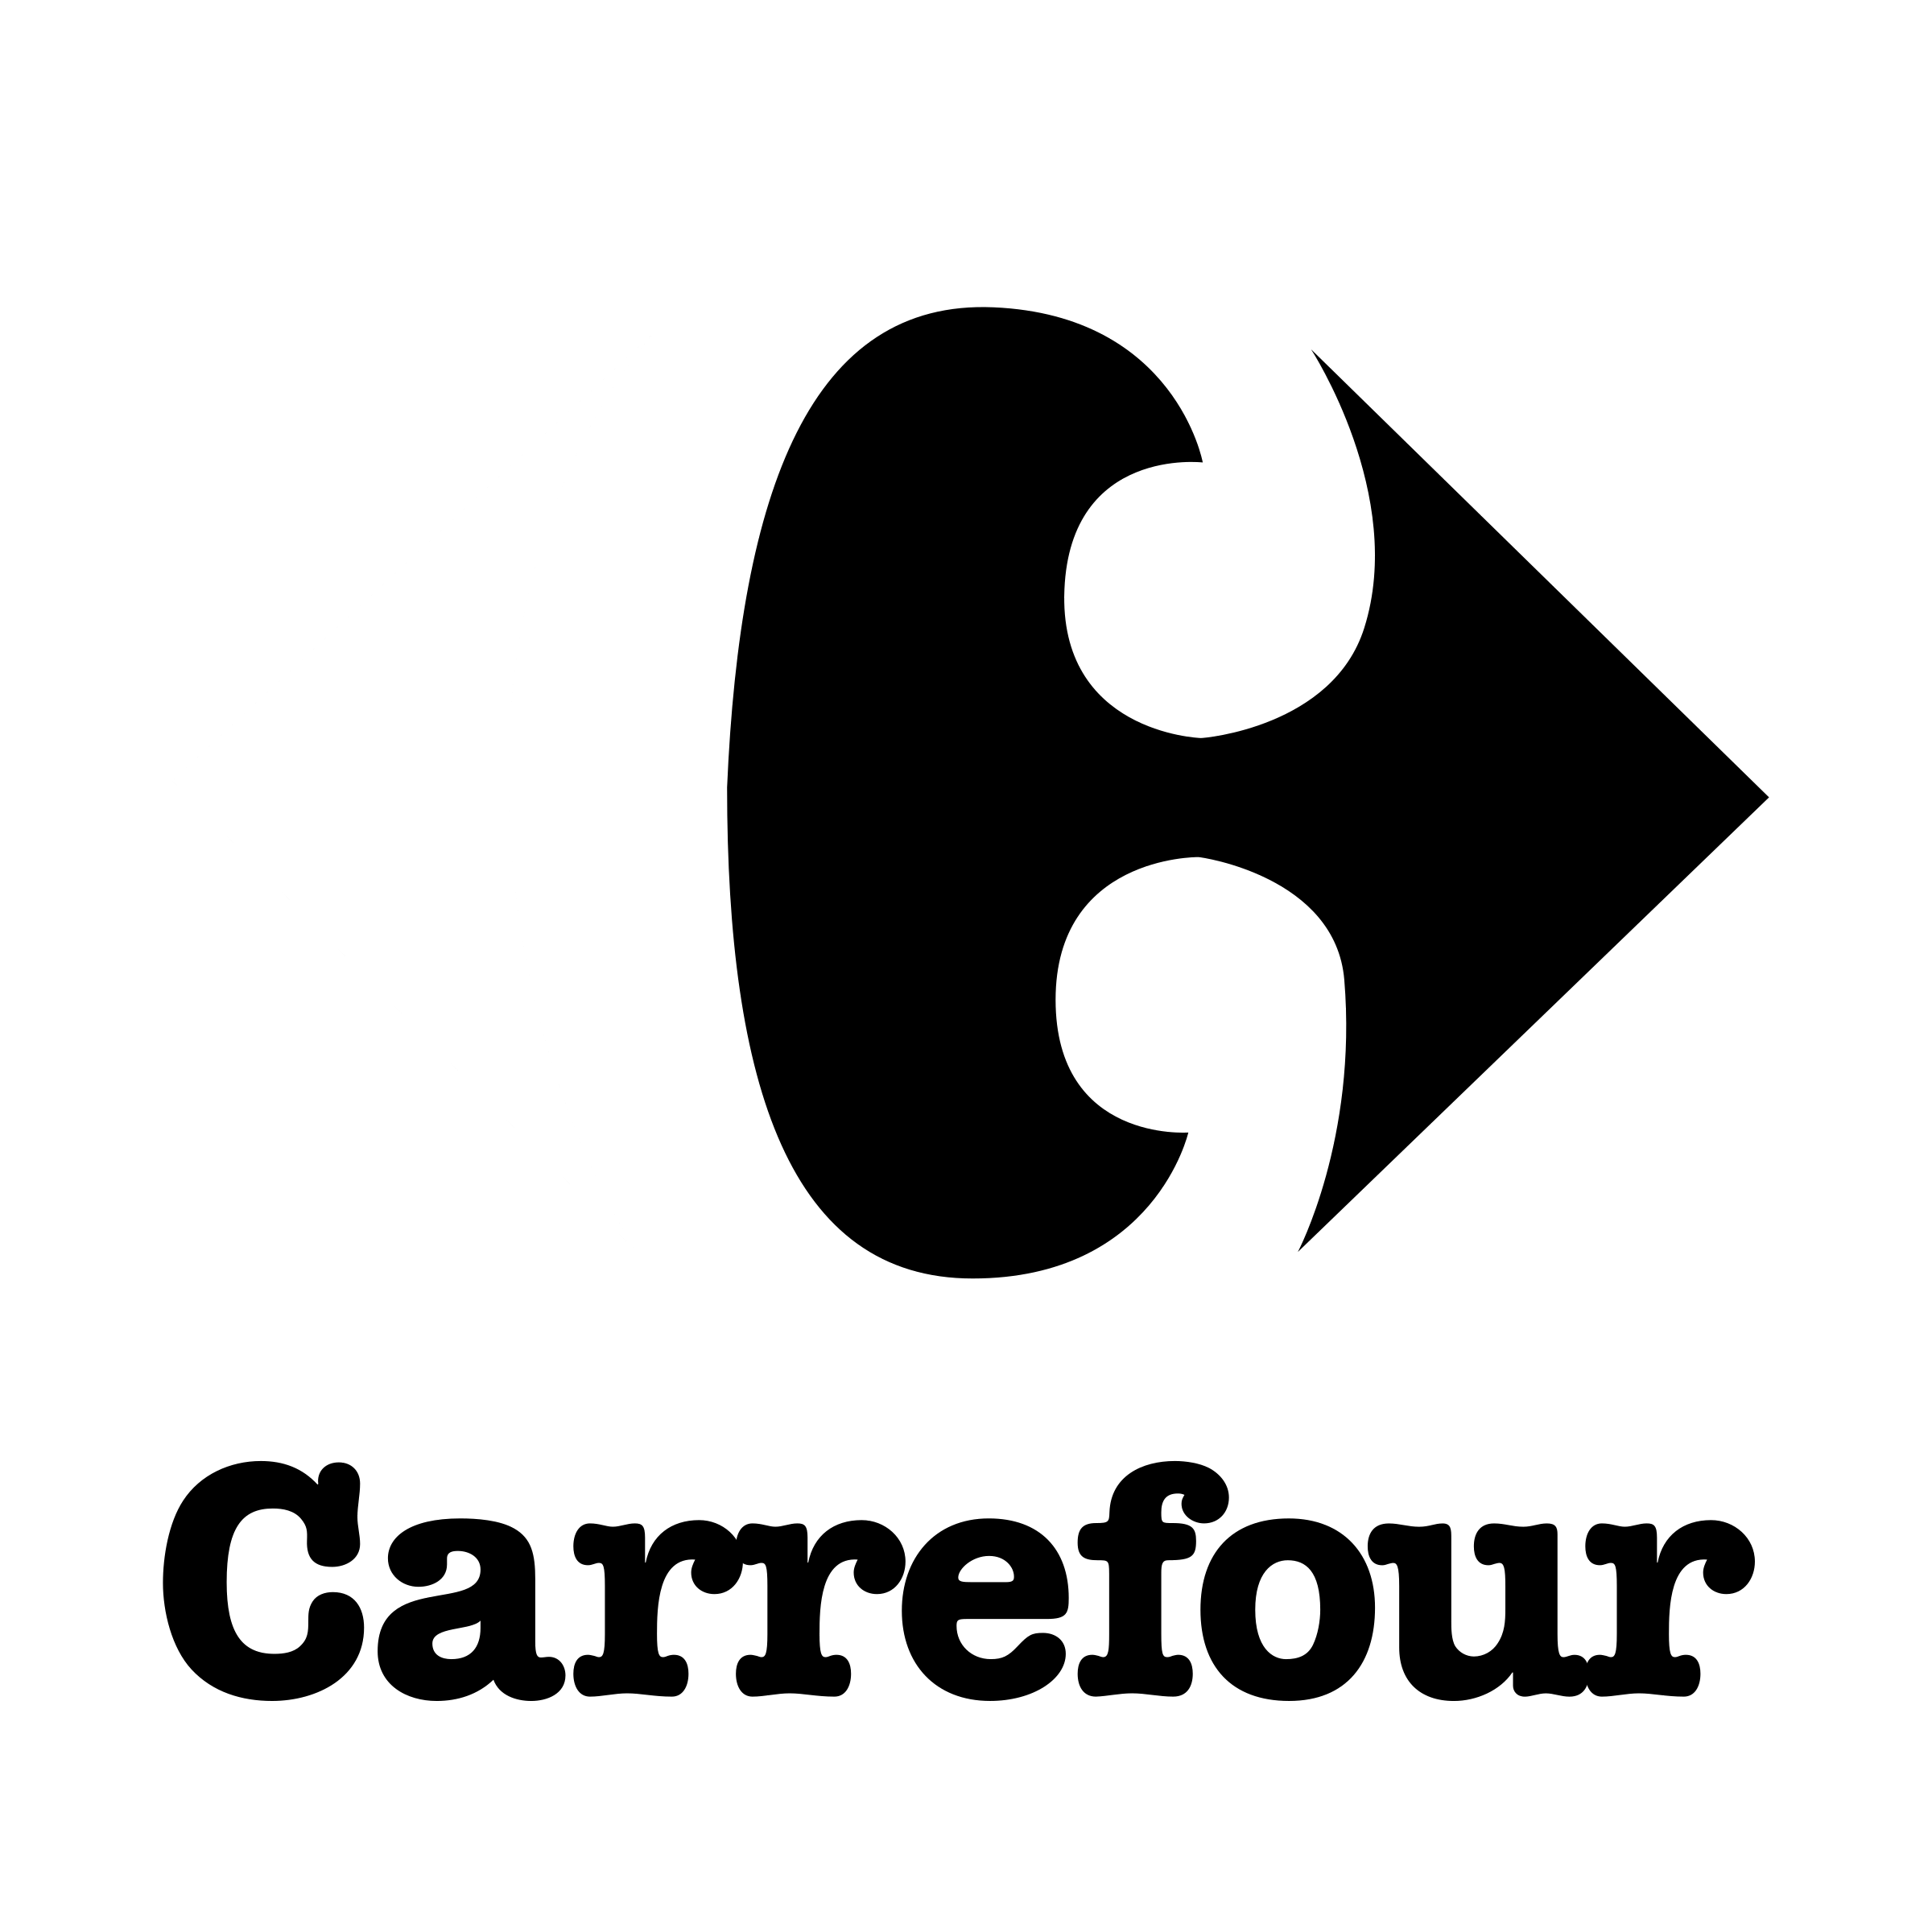 Carrefour Logo Transparent Pn